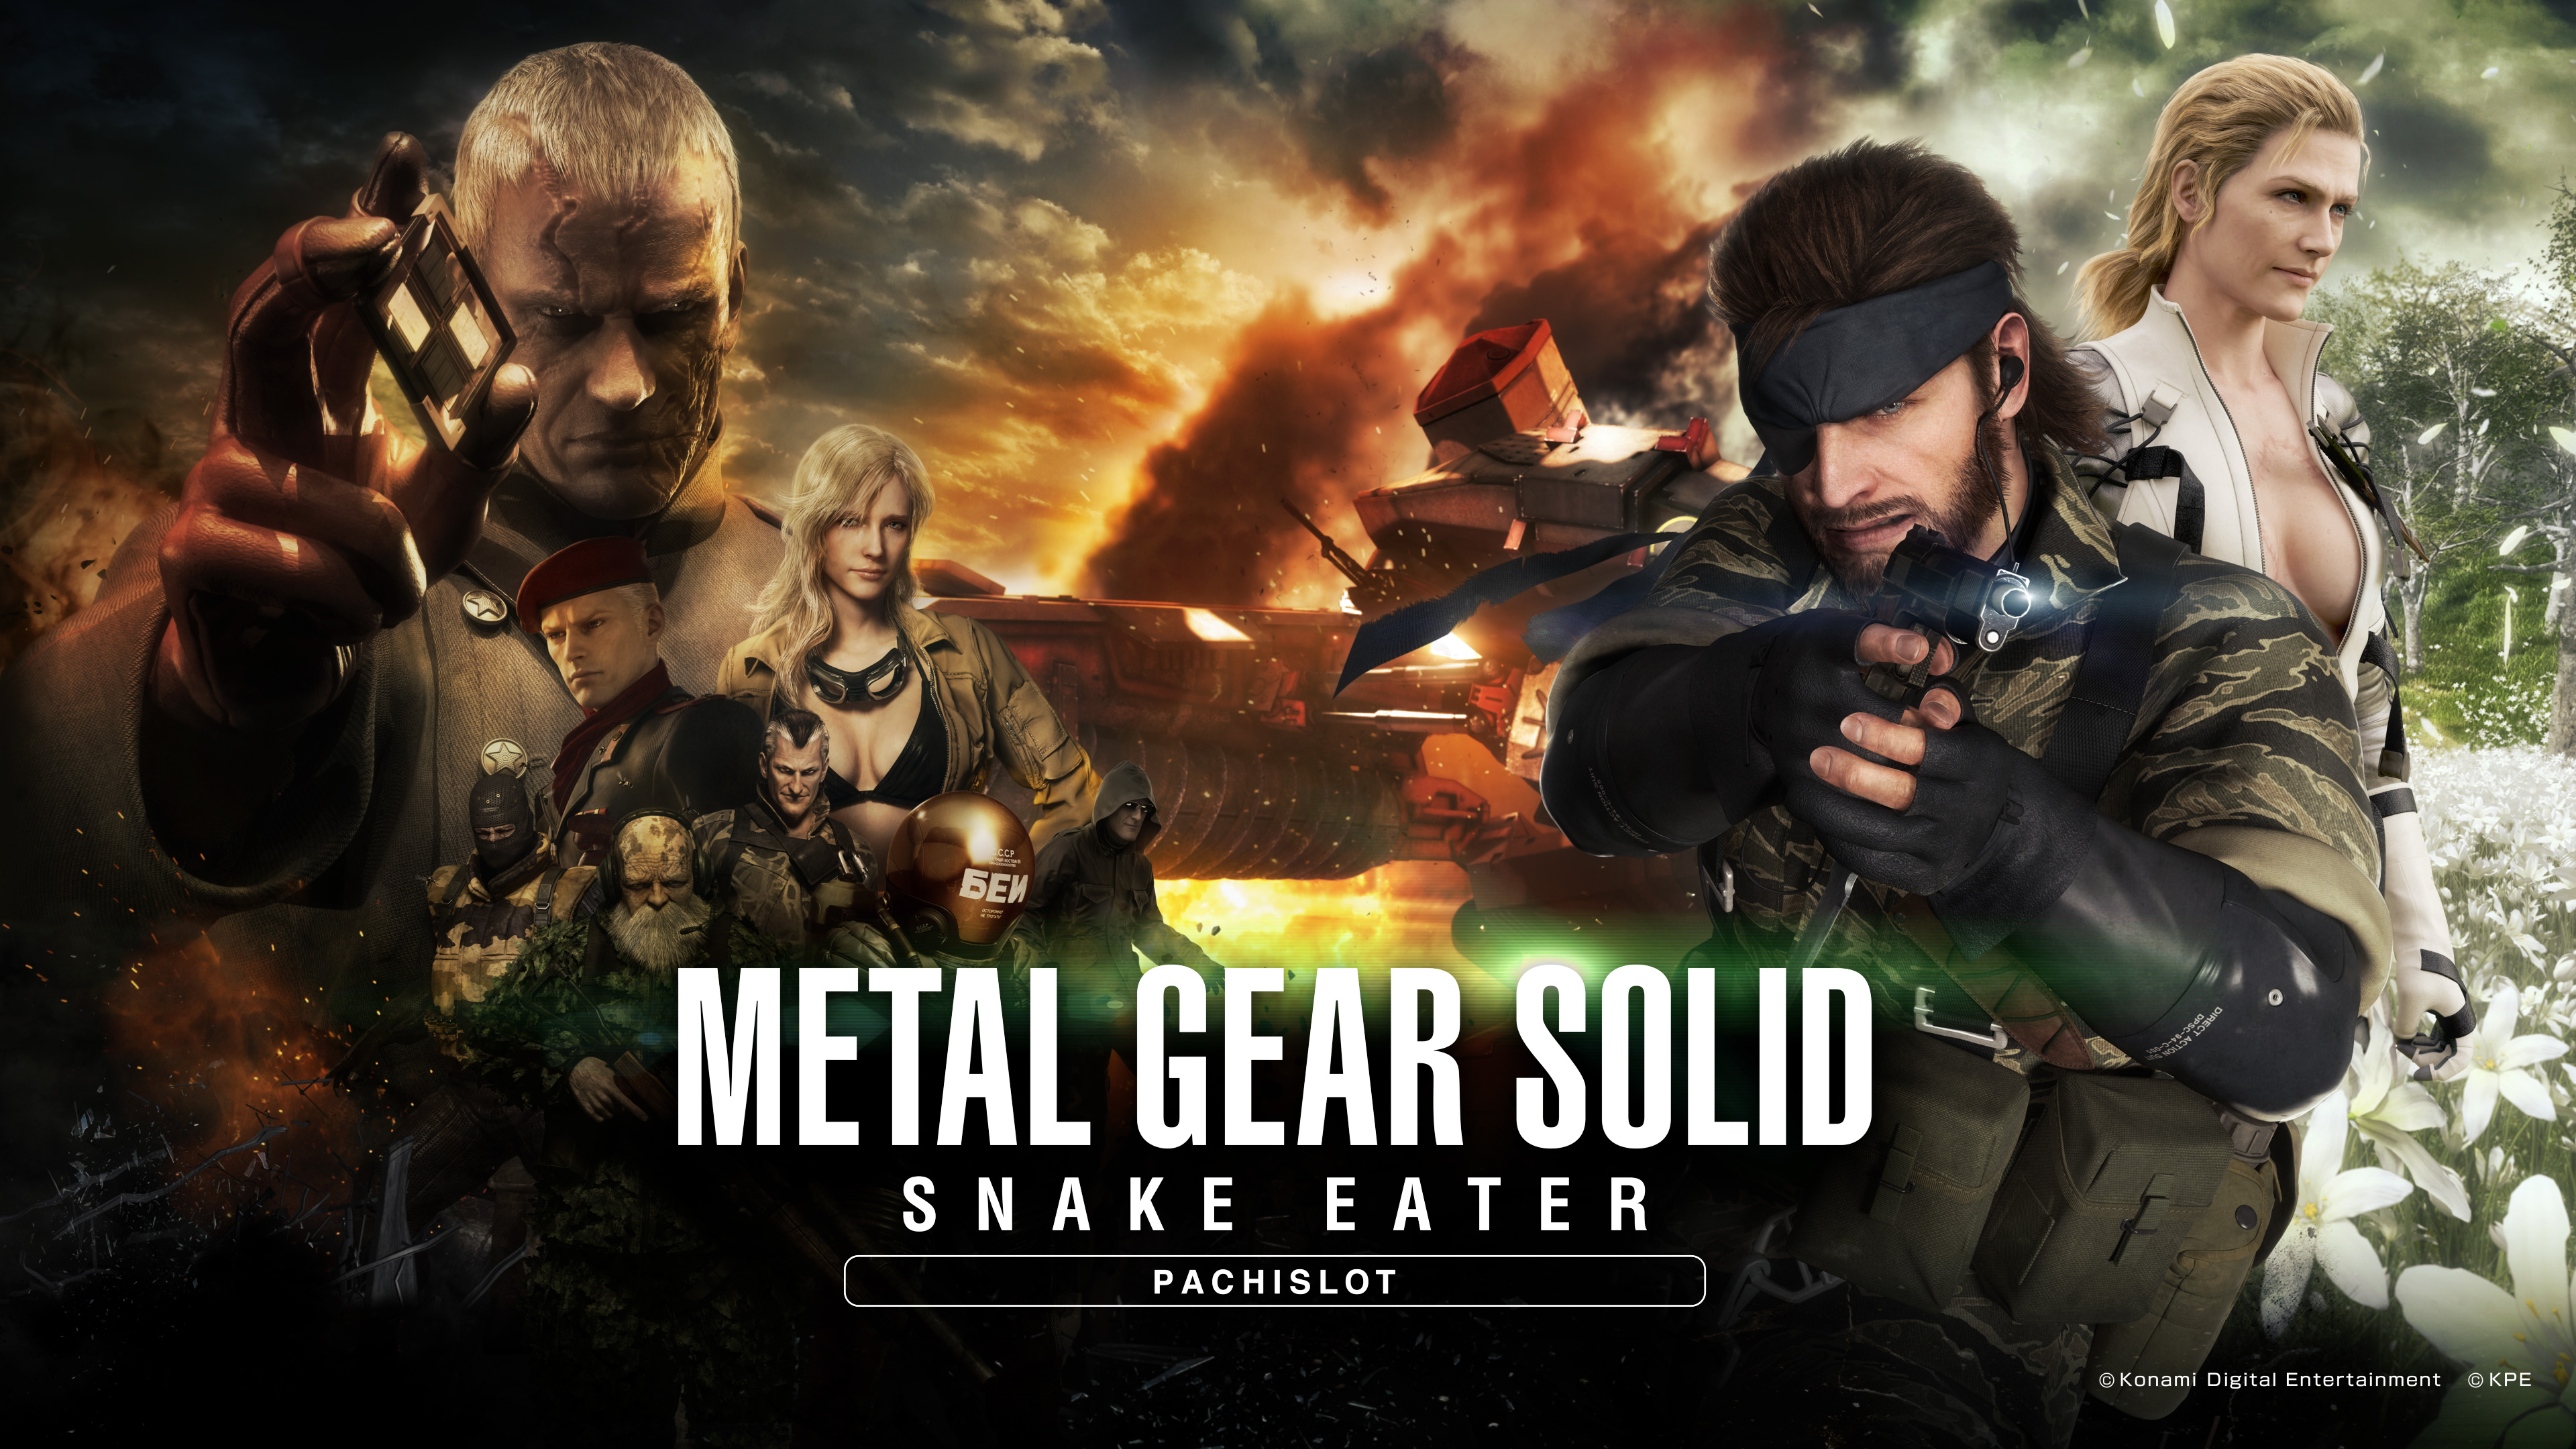 Official Metal Gear Solid Snake Eater Pachislot Wallpaper